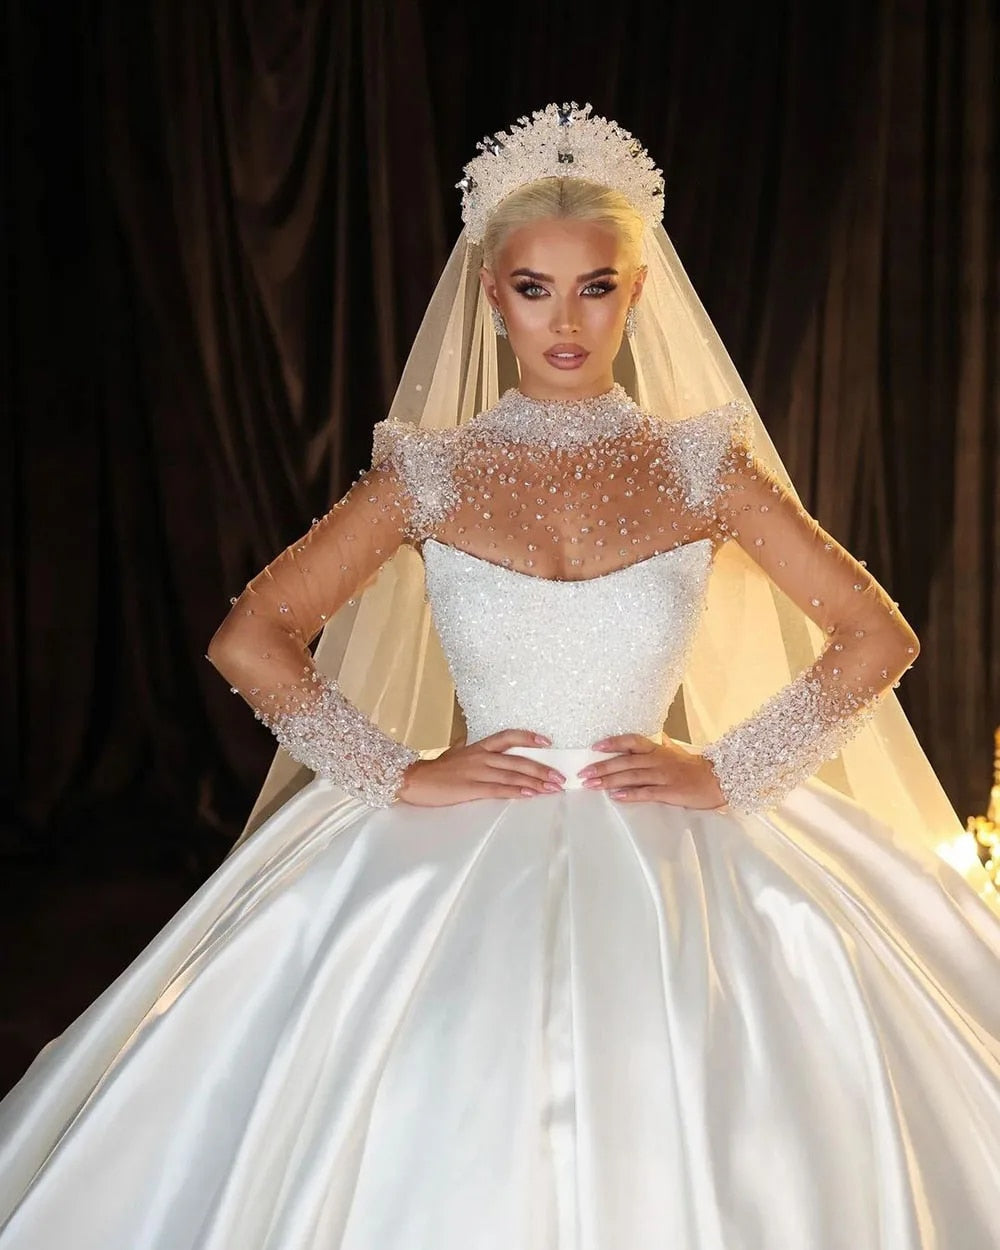 Crystal Illusion High Neck Wedding Dresses 2 Pcs